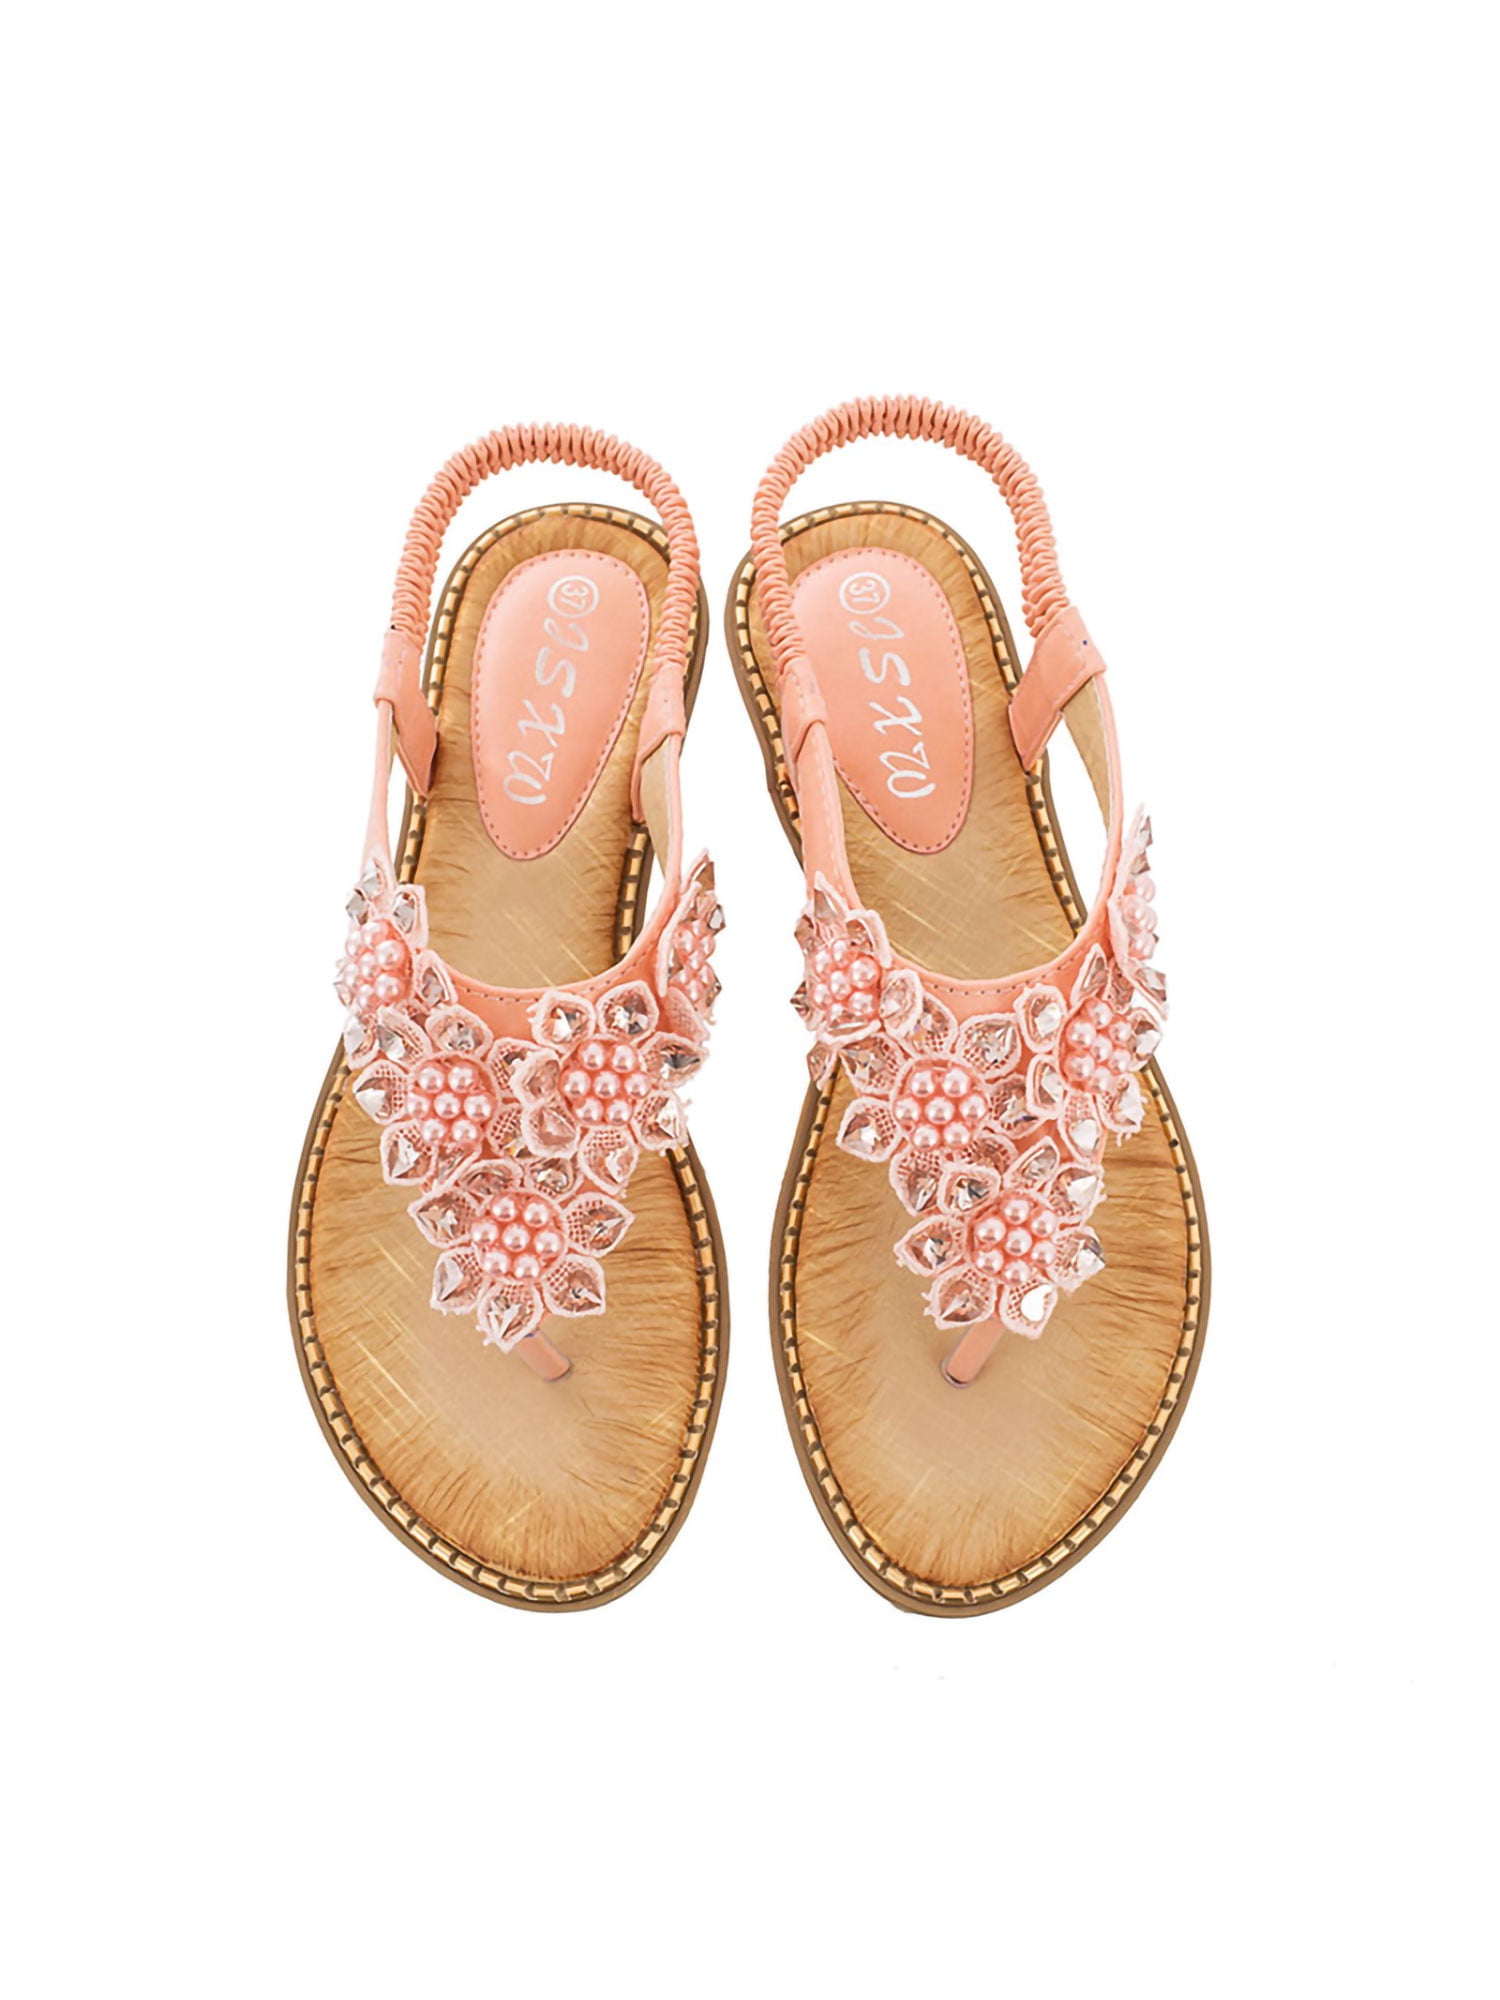 9, Pink Ladies Elastic Wide Strap Comfortable Flat Sandals Summer Causal Roman Shoes Women T-Strap Flip Flop